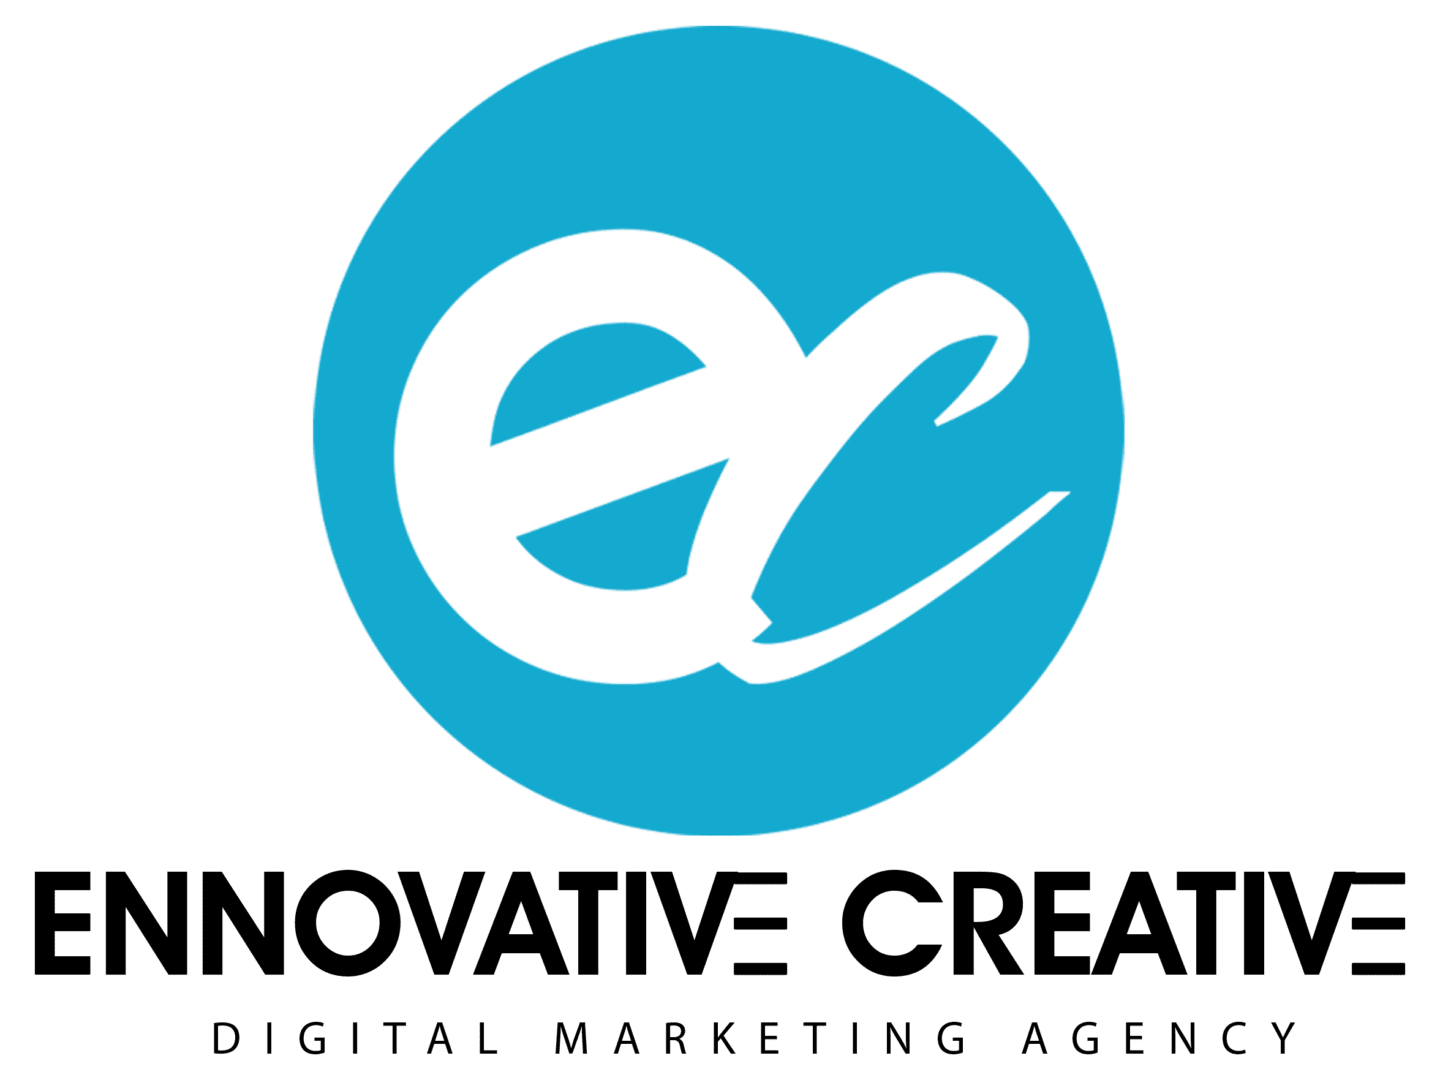 ennovative creative logo digital marketing age (1) (2)